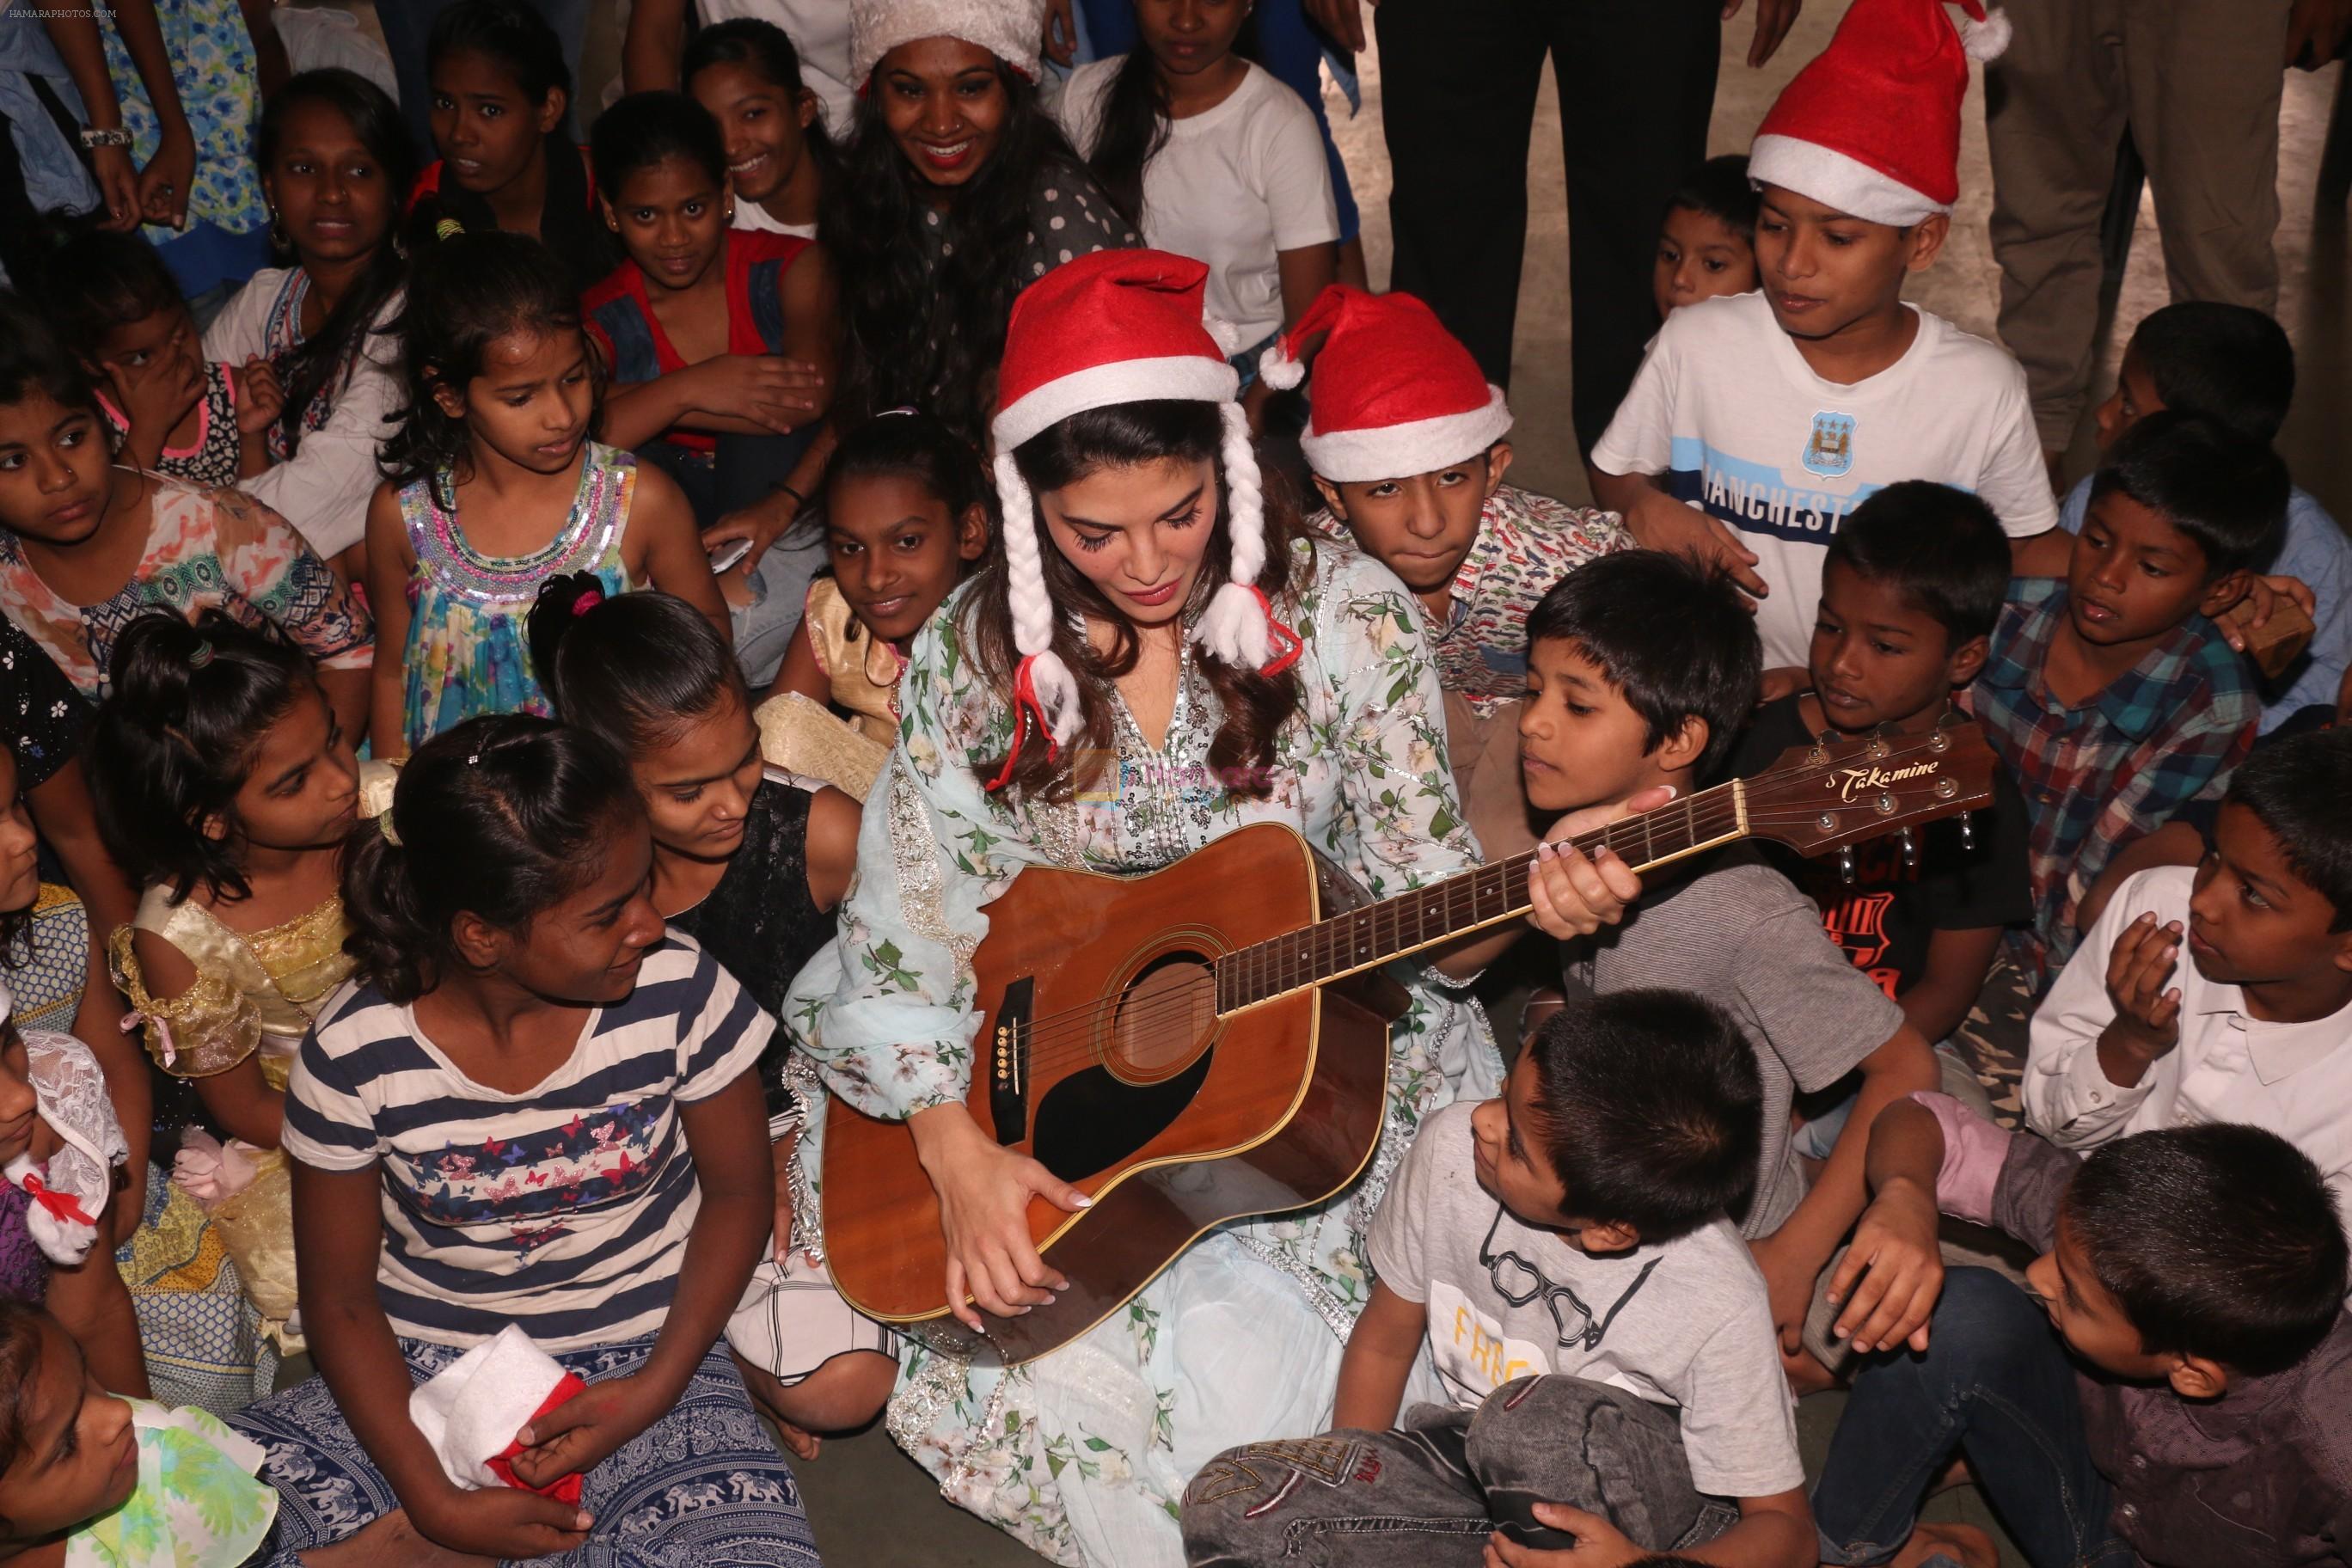 Jacqueline Fernandez celebrates Christmas with underprivileged children at bandra on 25th Dec 2018